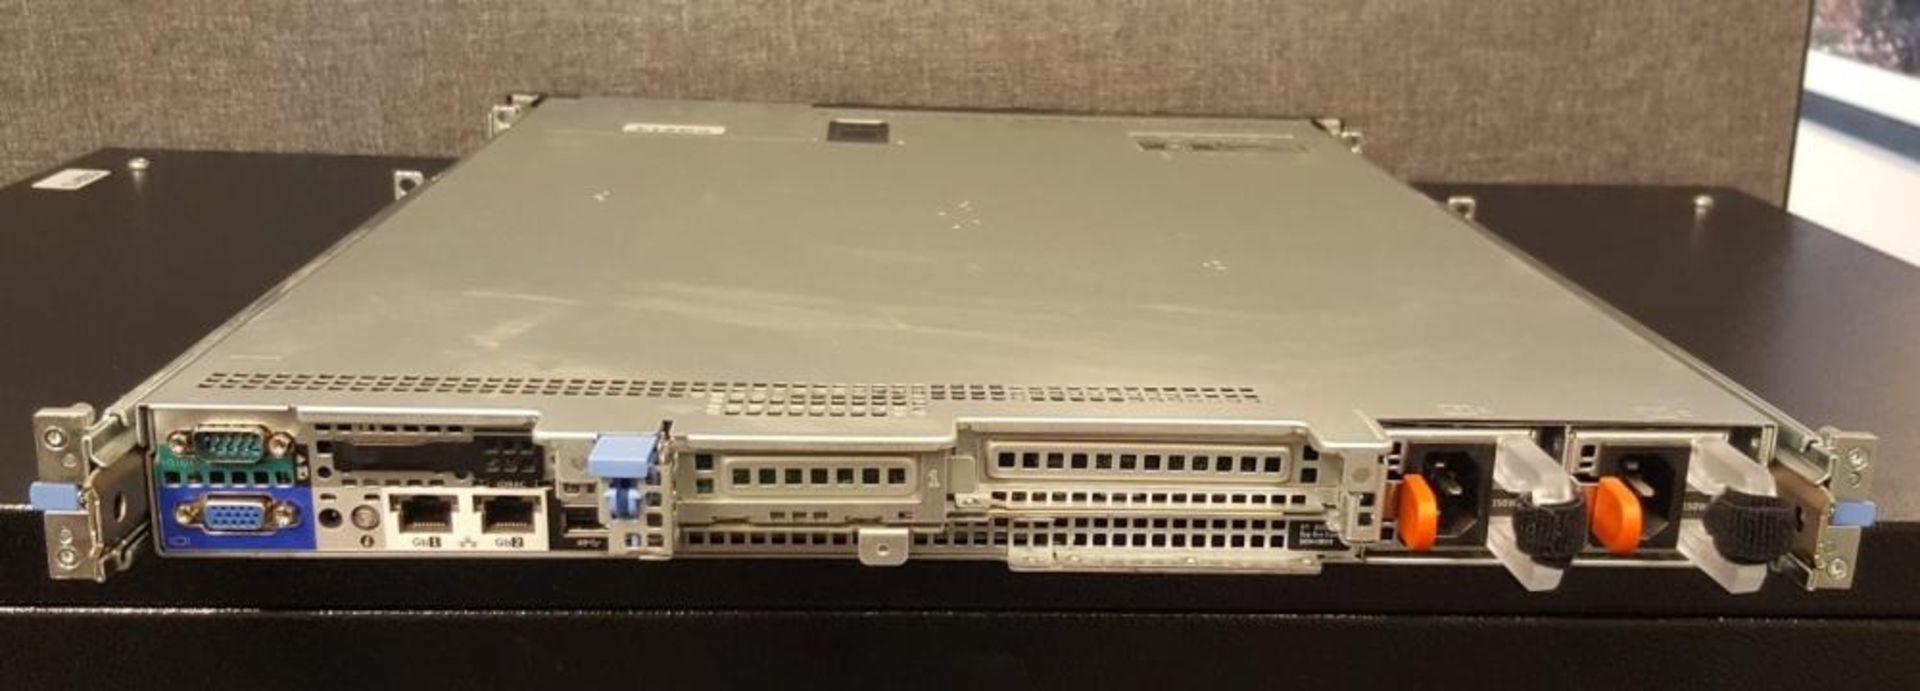 1 x Dell PowerEdge R330 1U Rack Server With Intel Xeon E3-1220V6 3 GHz &amp; 32GB RAM - Ref CQ214 - - Image 5 of 10